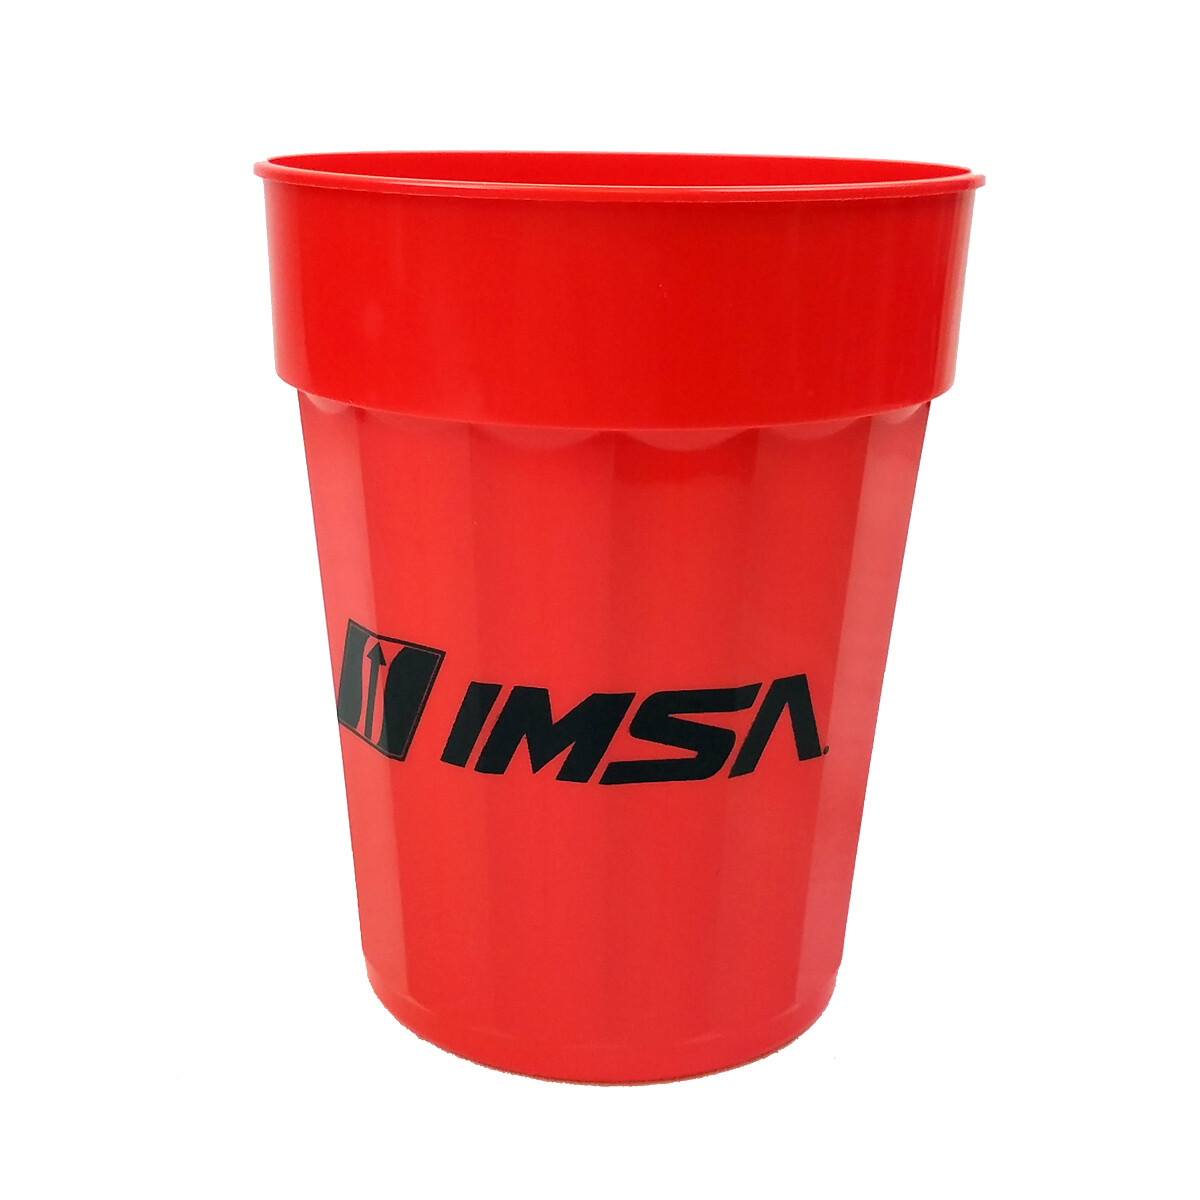 IMSA Stadium Cup-Black or Red